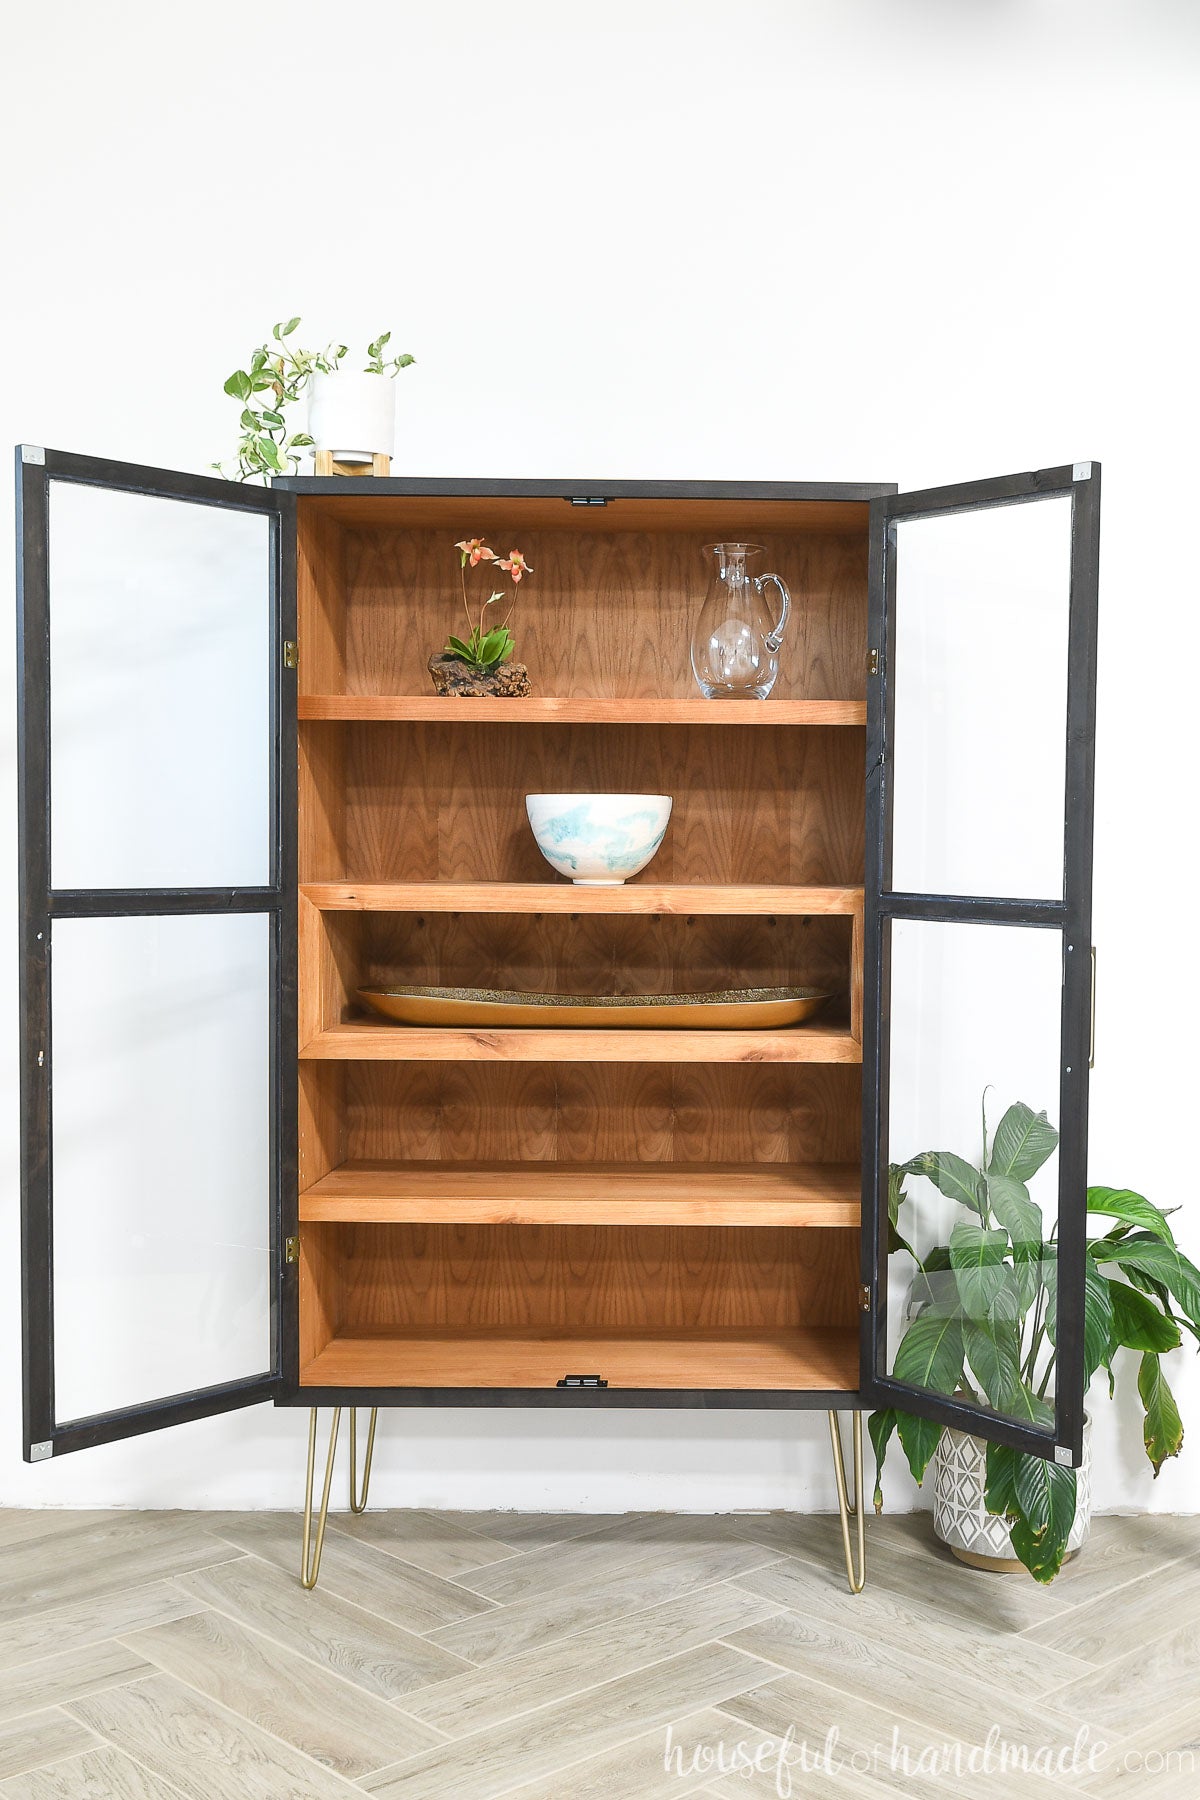 – Woodworking Modern Houseful Handmade Cabinet of Display Plans